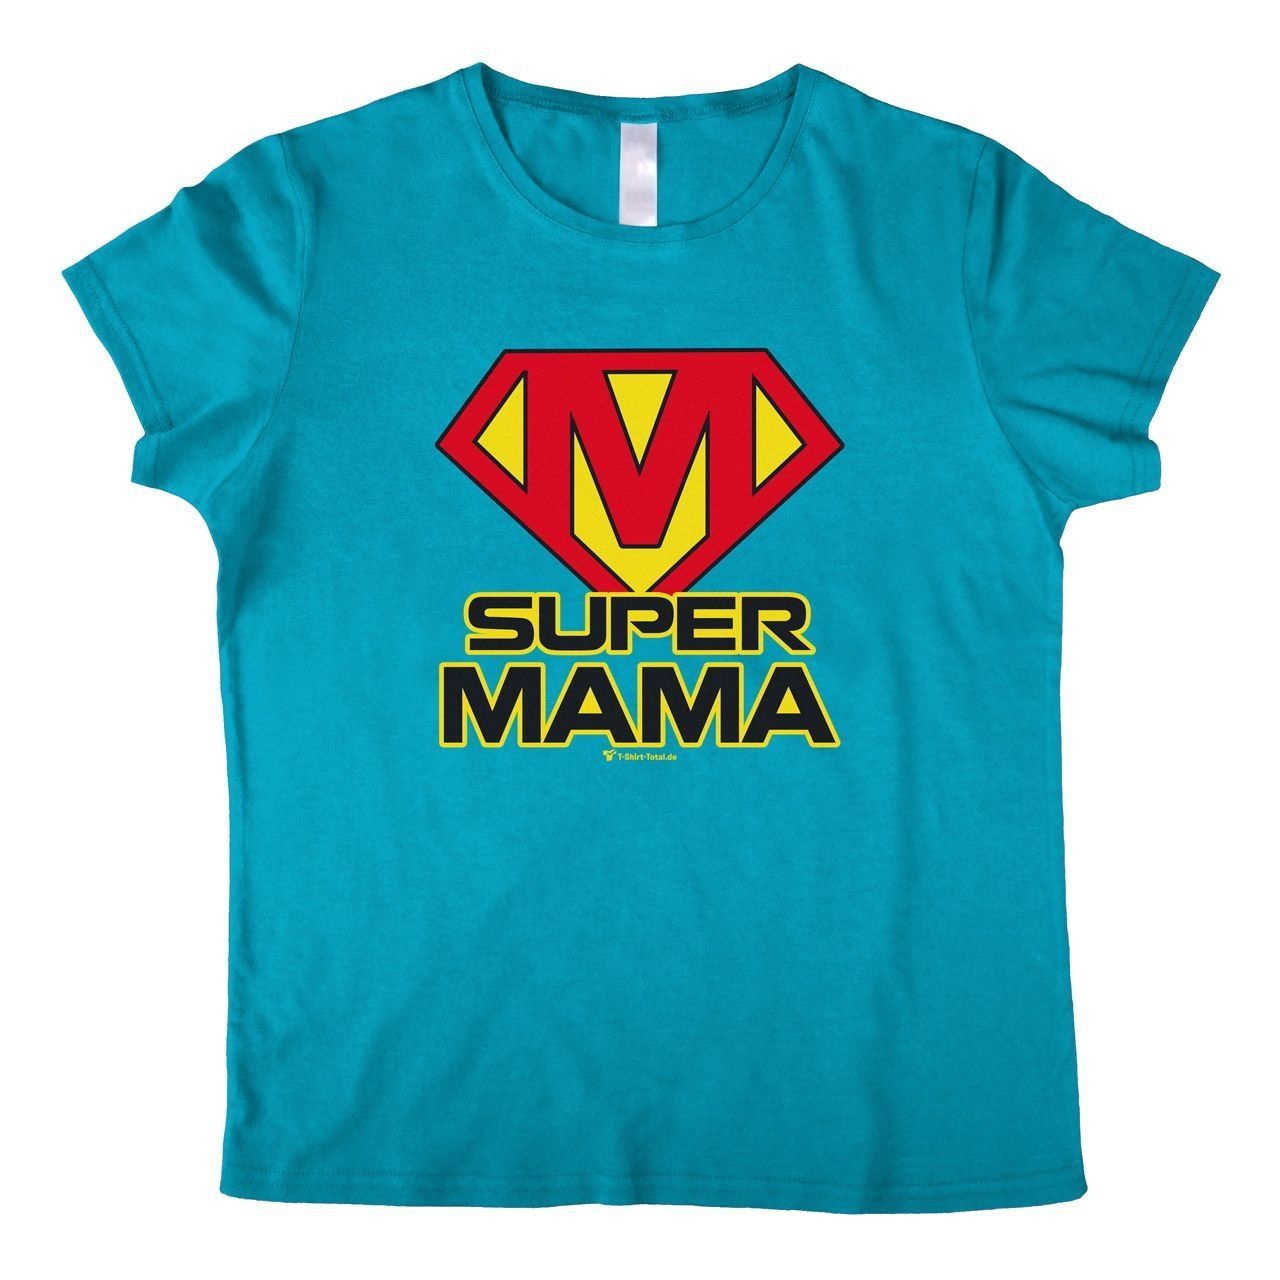 Super Mama Woman T-Shirt türkis 2-Extra Large